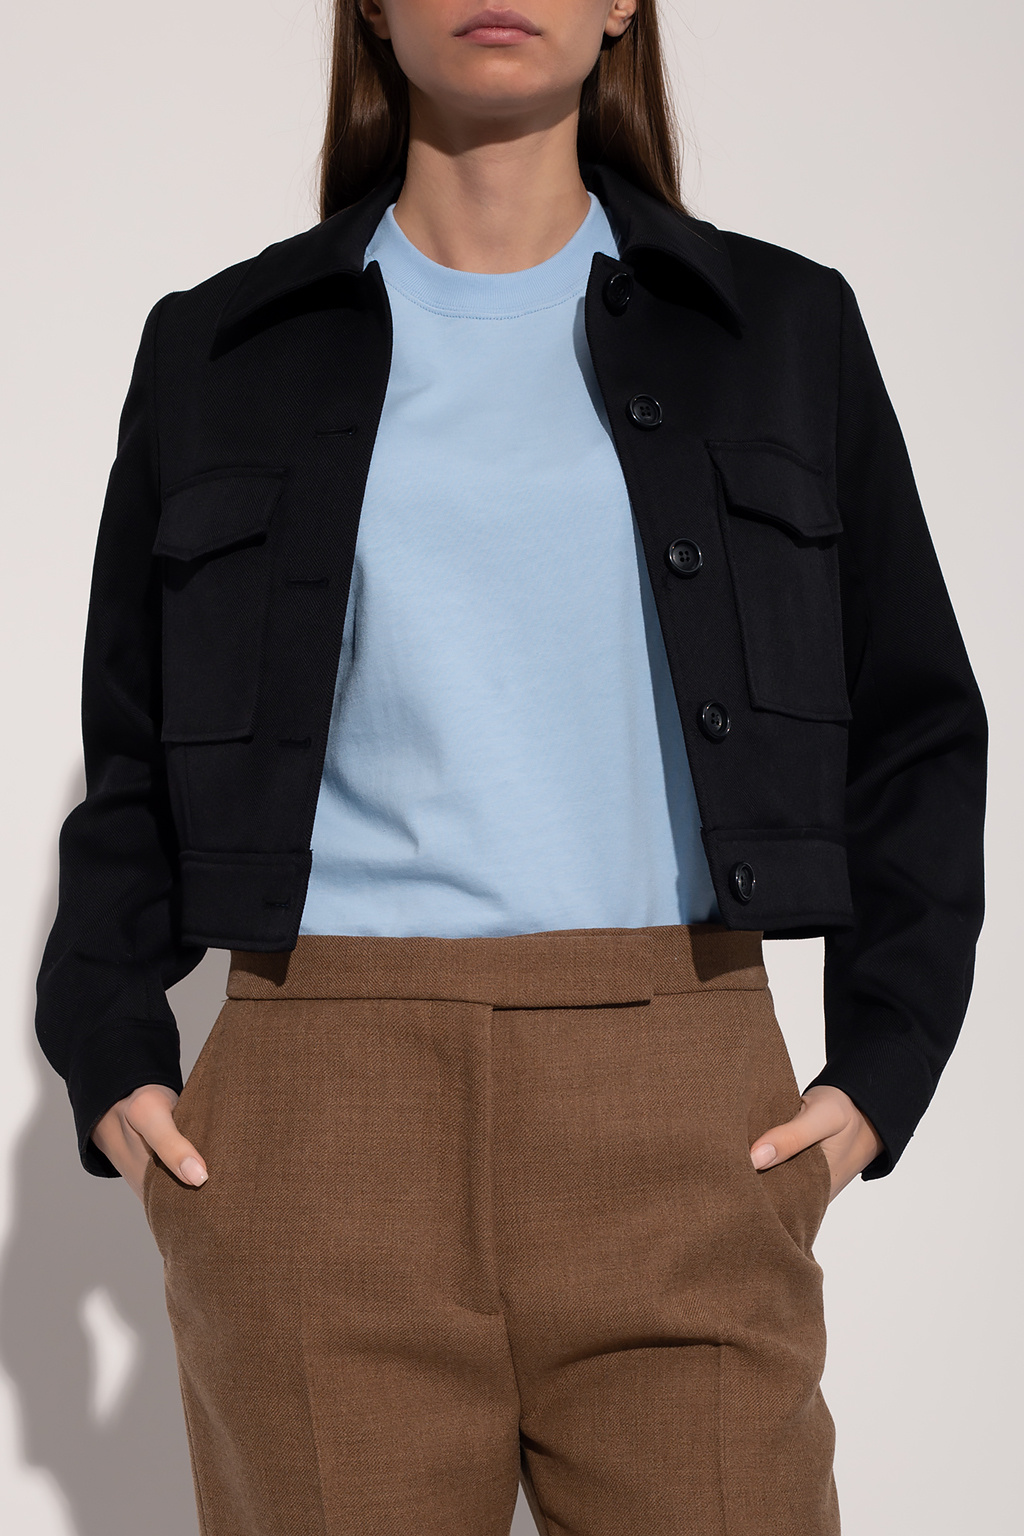 Ami Alexandre Mattiussi Wool Versace jacket